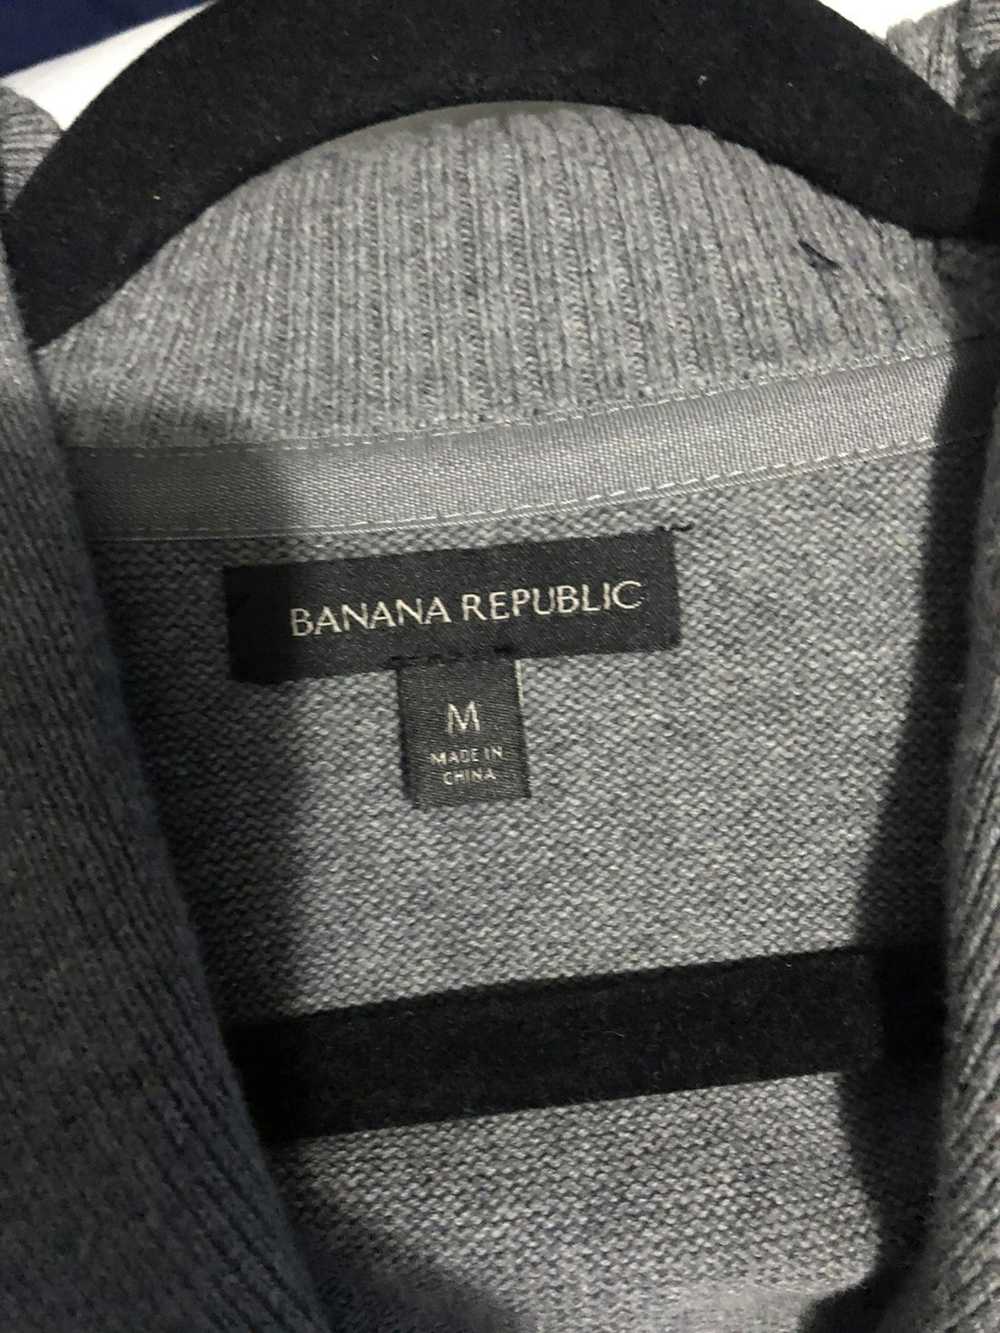 Banana Republic Banana Republic Cardigan - image 2